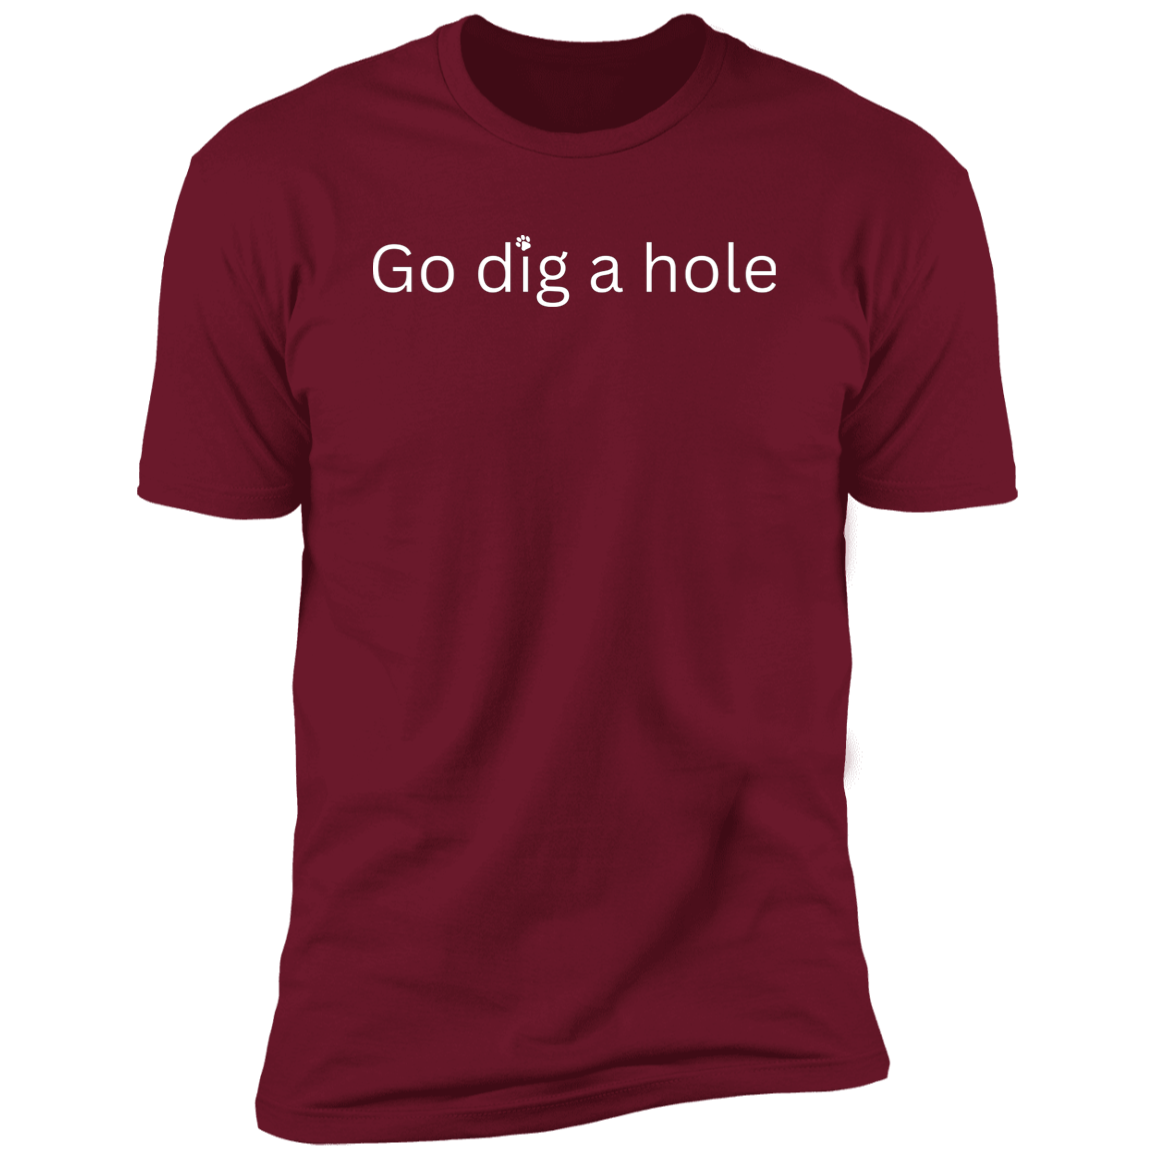 Go Dig a Hole Dog T-Shirt, Dog shirt for humans, funny dog shirt, funny t-shirt, in cardinal red